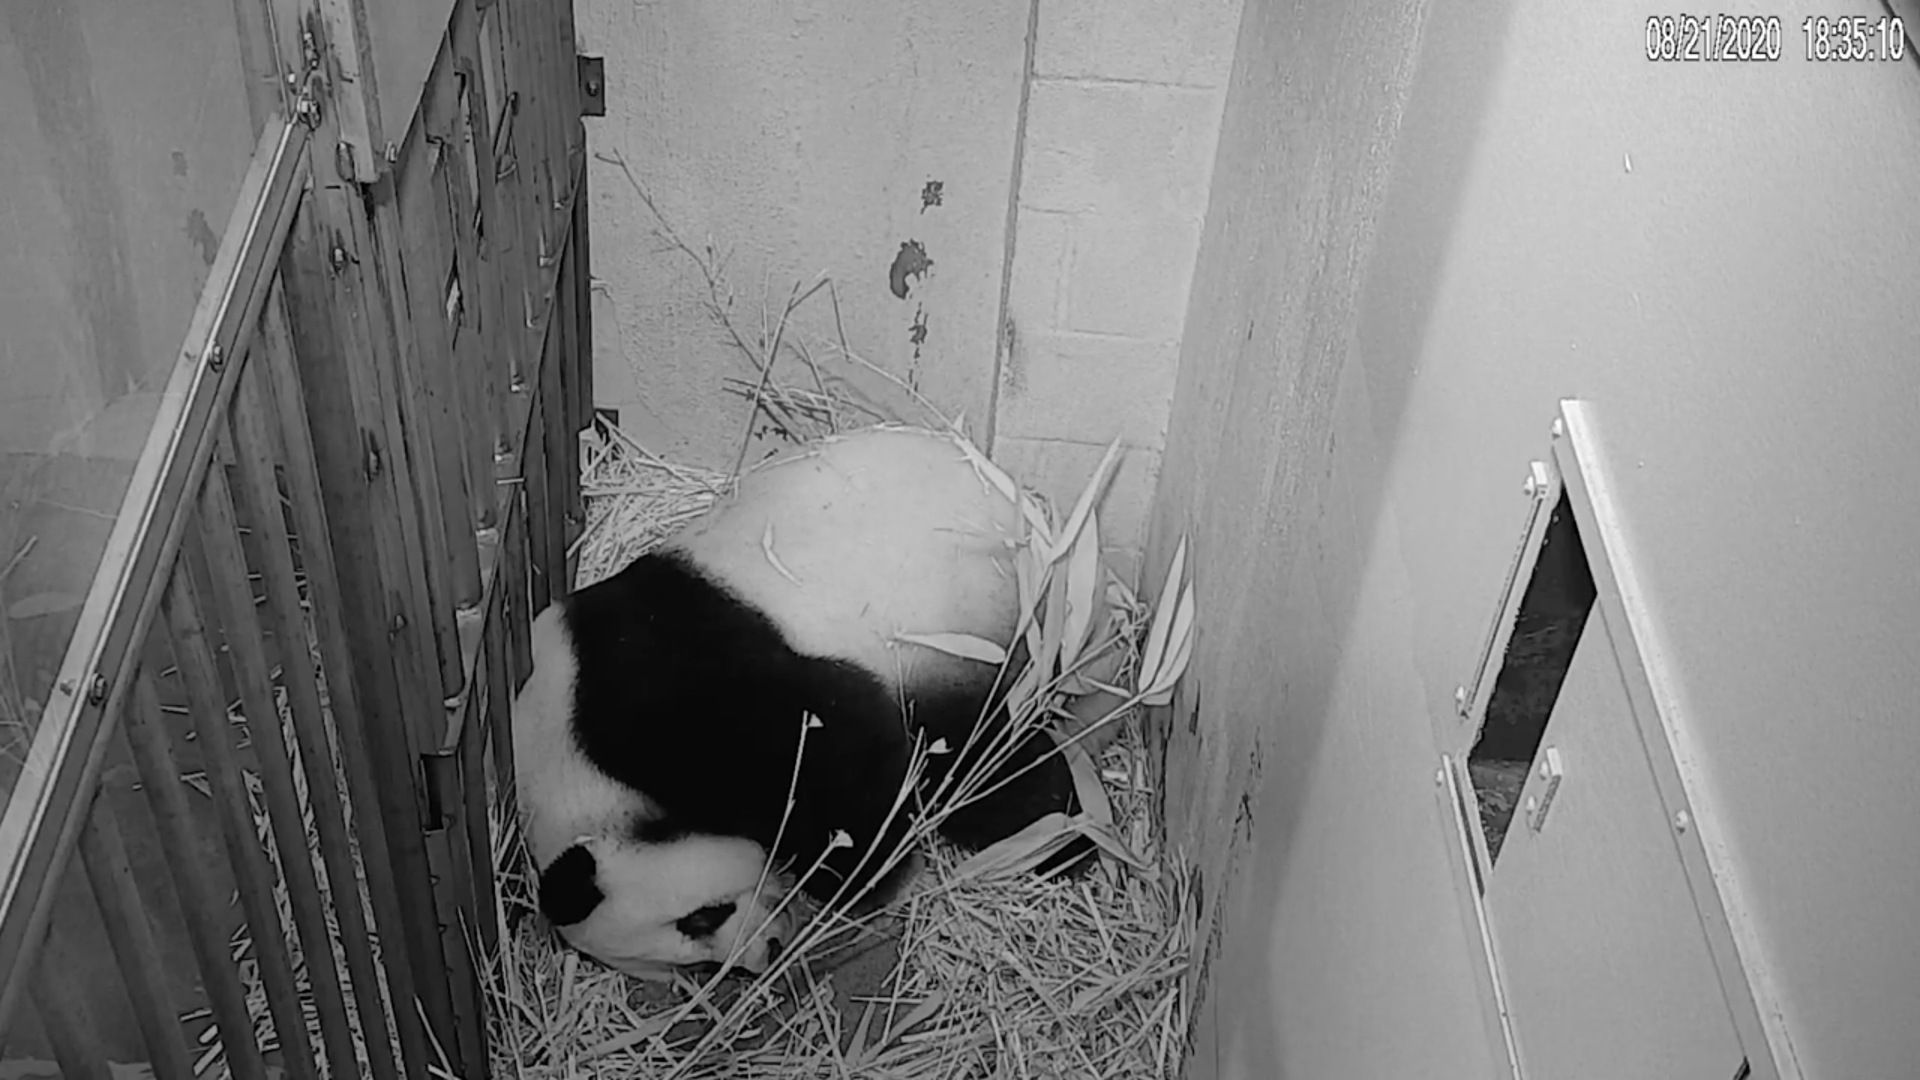 Giant panda Mei Xiang gives birth to fourth cub at U.S. National Zoo - CGTN